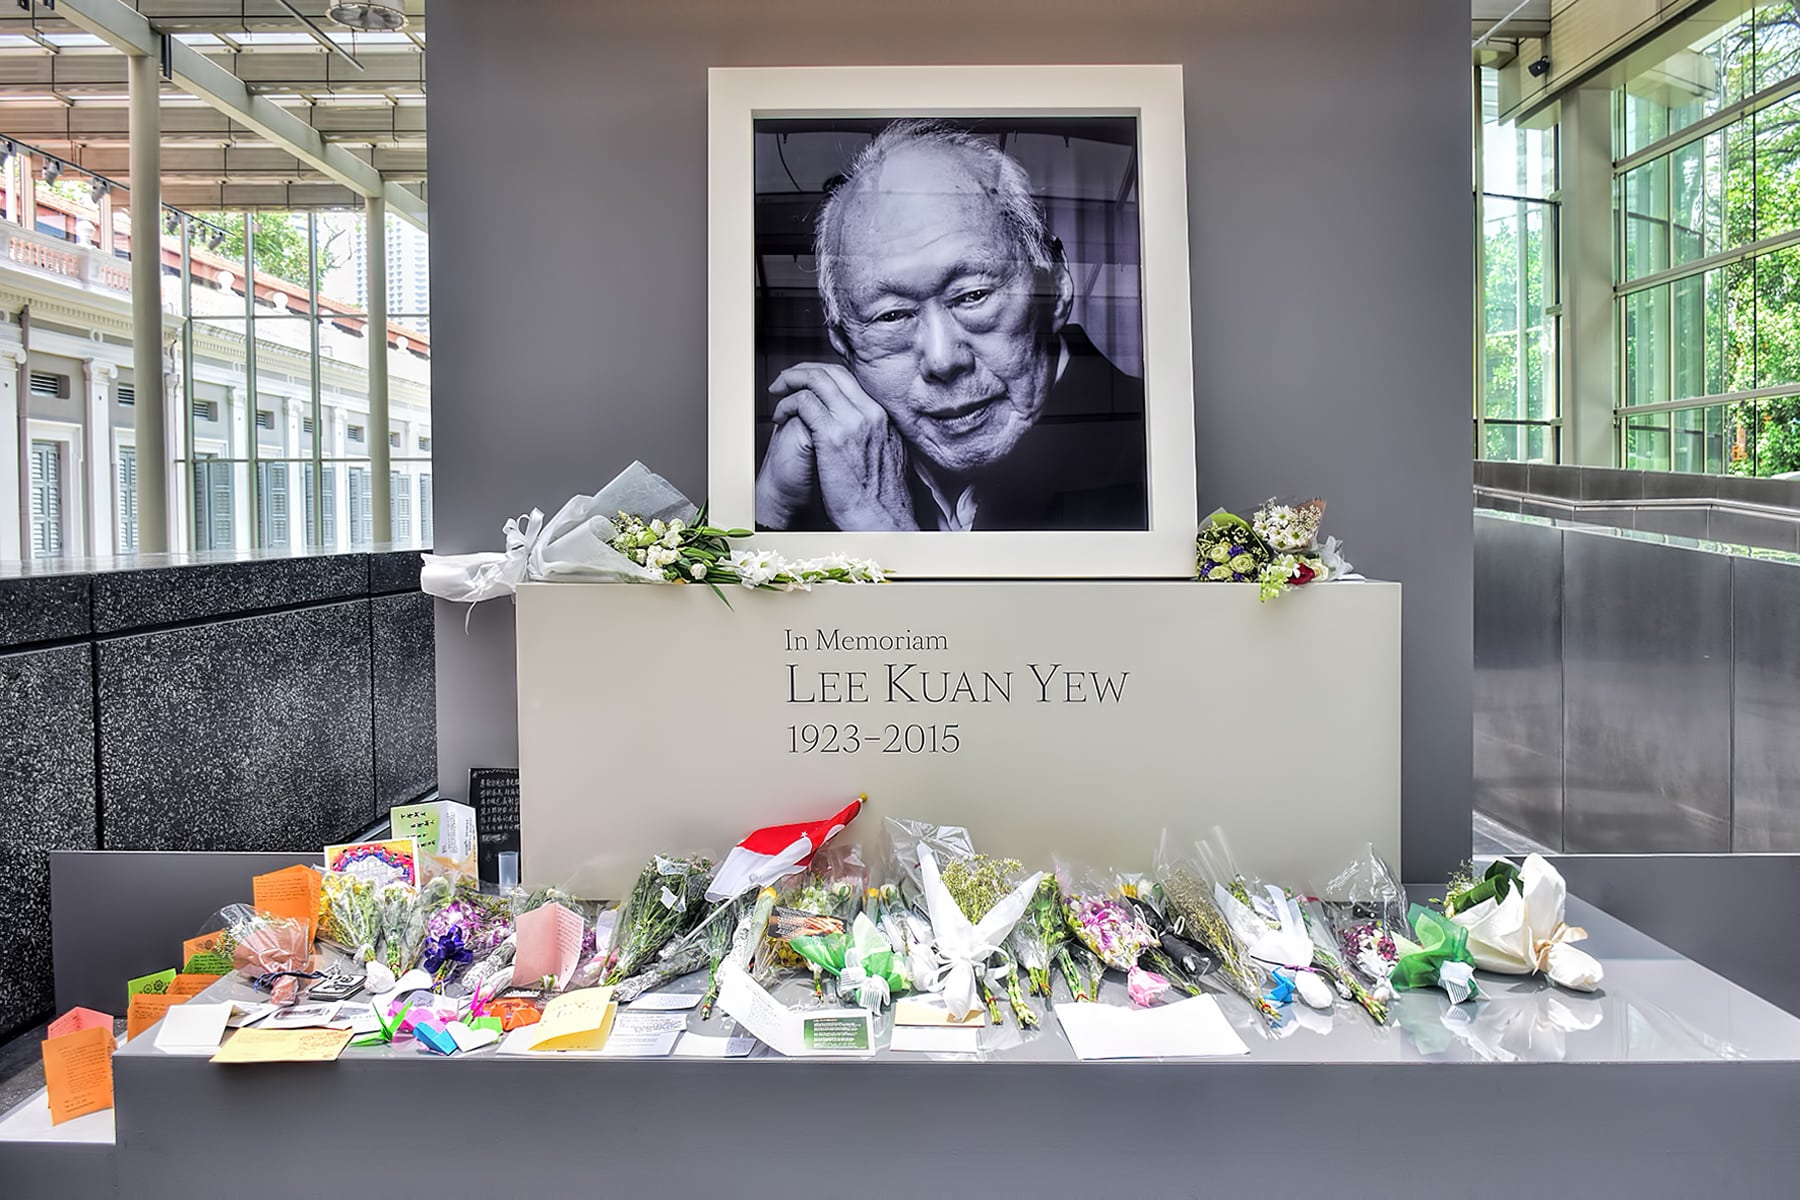 Memorial por Lee Kuan Yew, líder de Singapur